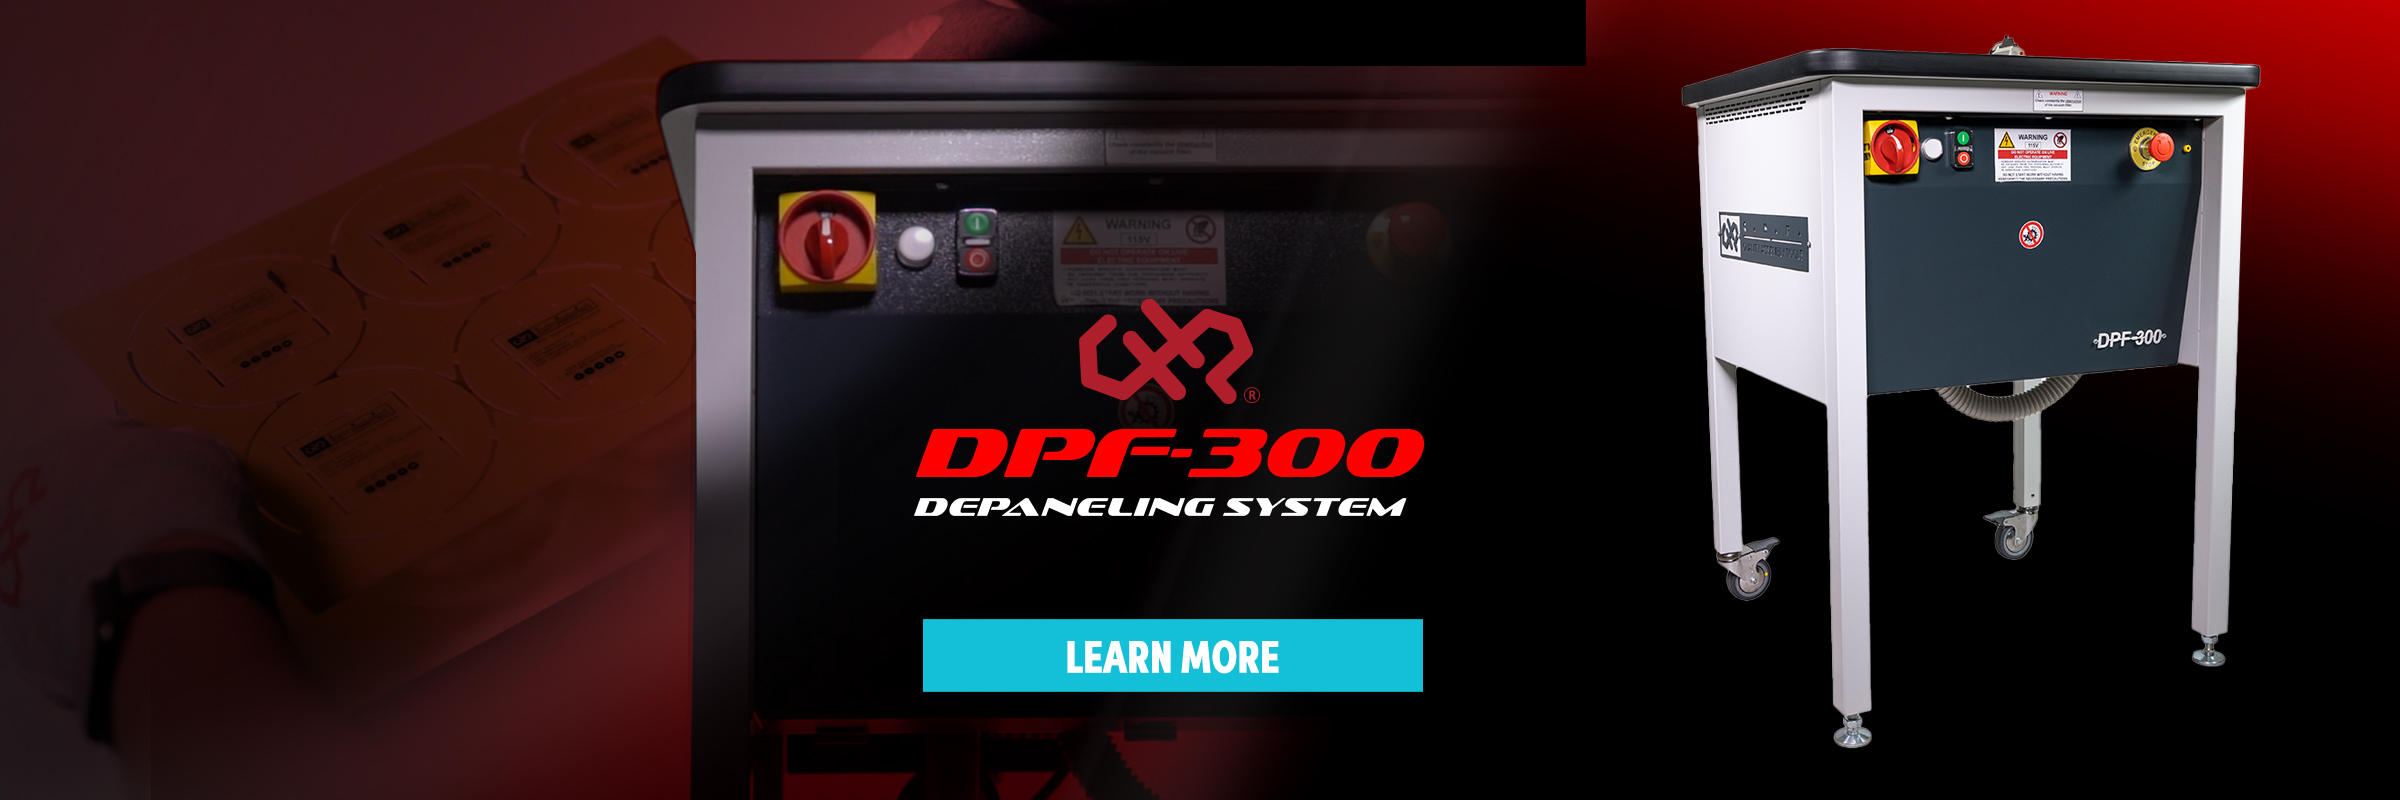 DPF-300 Depaneler System